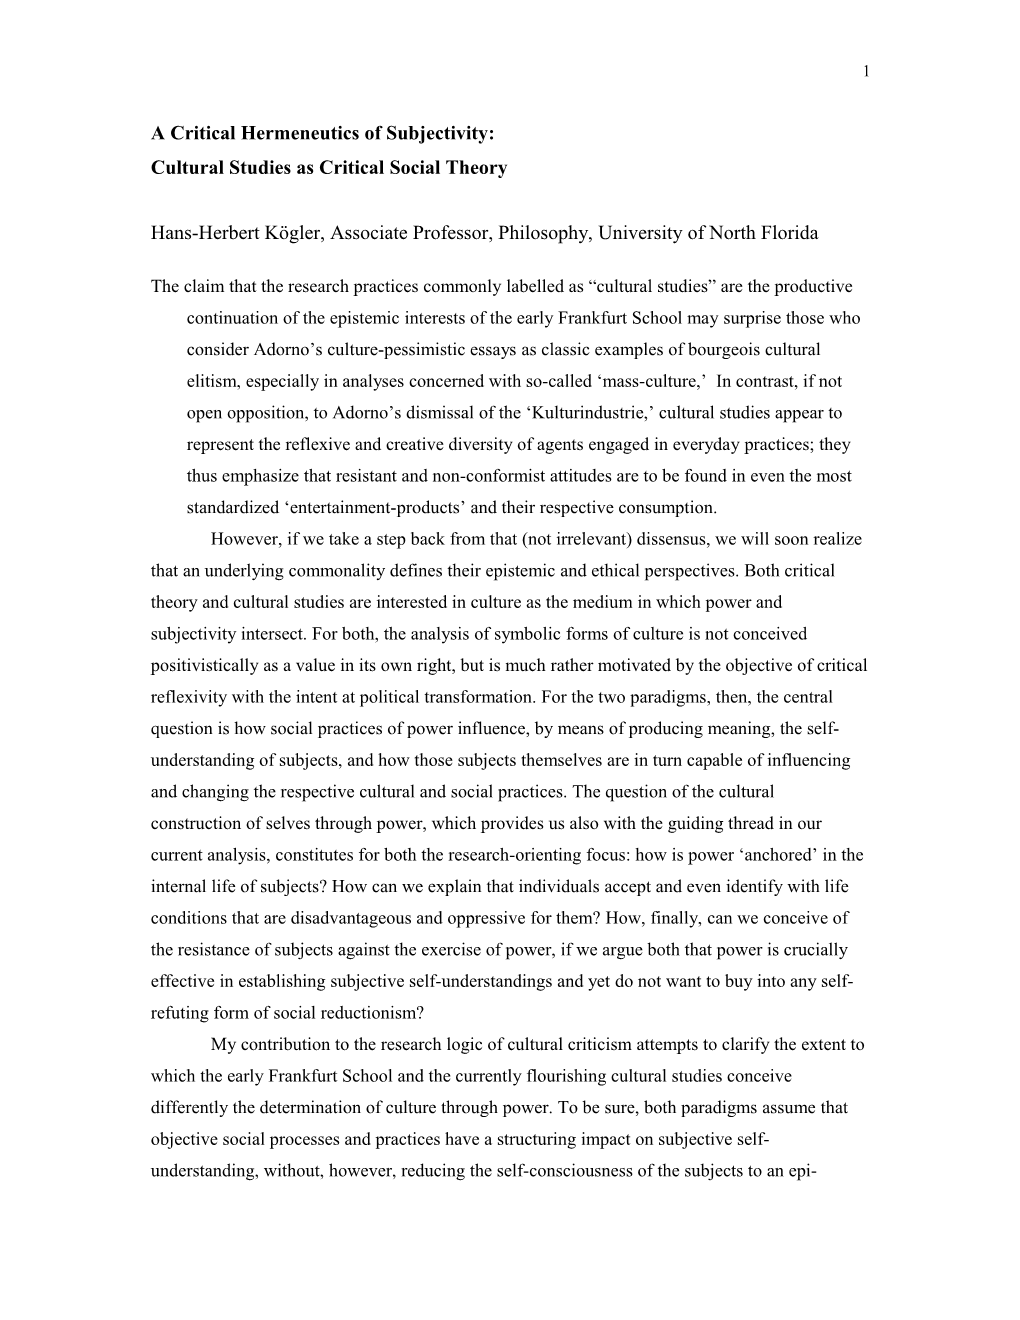 Cultural Studies As Critical Social Theory